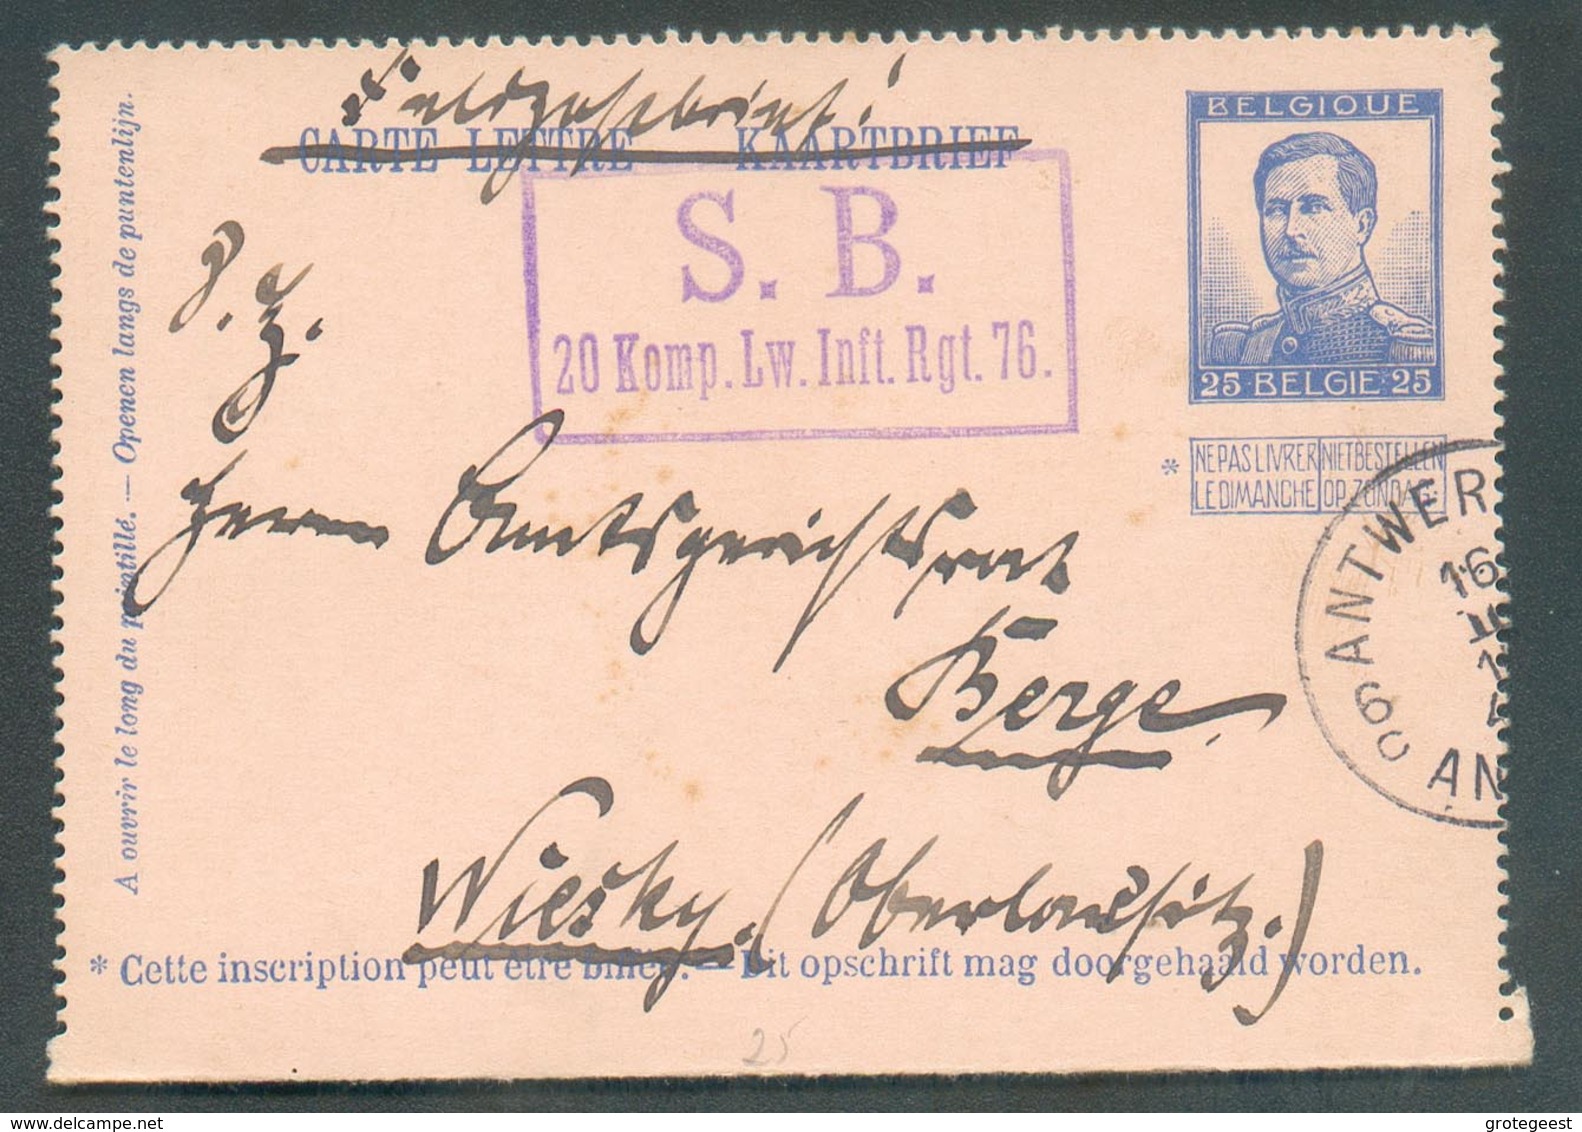 E.P. Carte-lettre 25c. Pellens Obl. Sc ANTWERPEN 6 Du 16-II-1915 En Feldpostbrief + Griffe Violette S.B. 20.Komp.Lw.Infl - Carte-Lettere